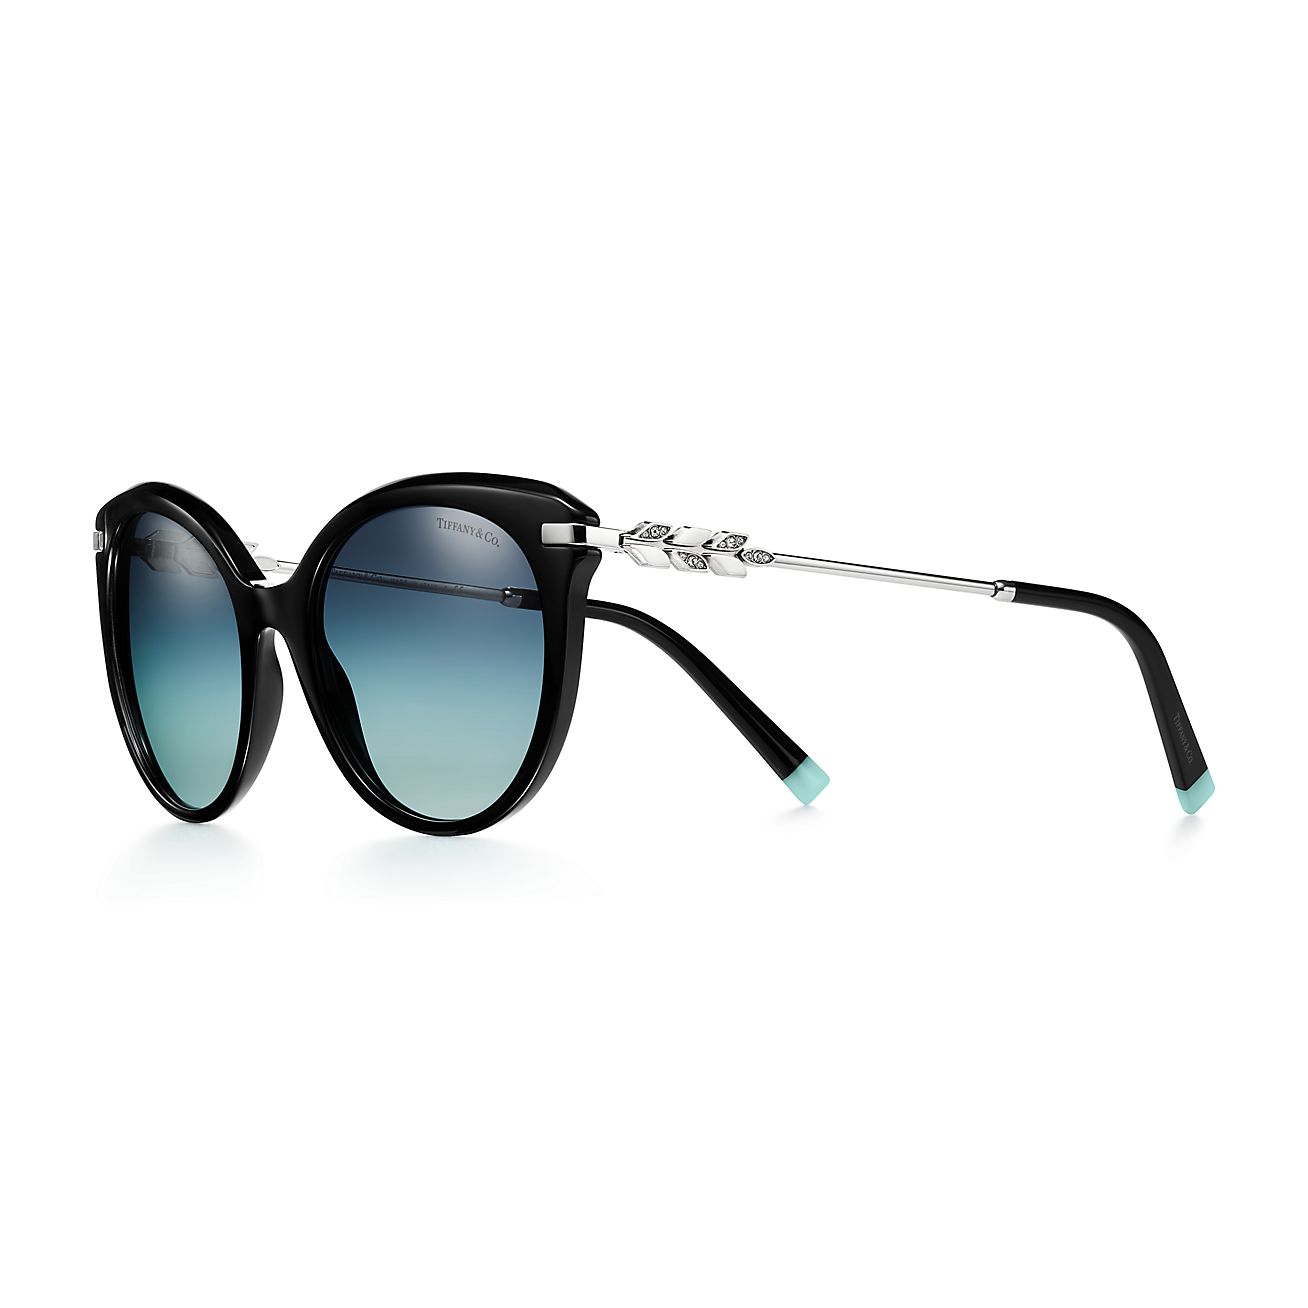 Tiffany Victoria® Sunglasses in Black Acetate with Gradient 